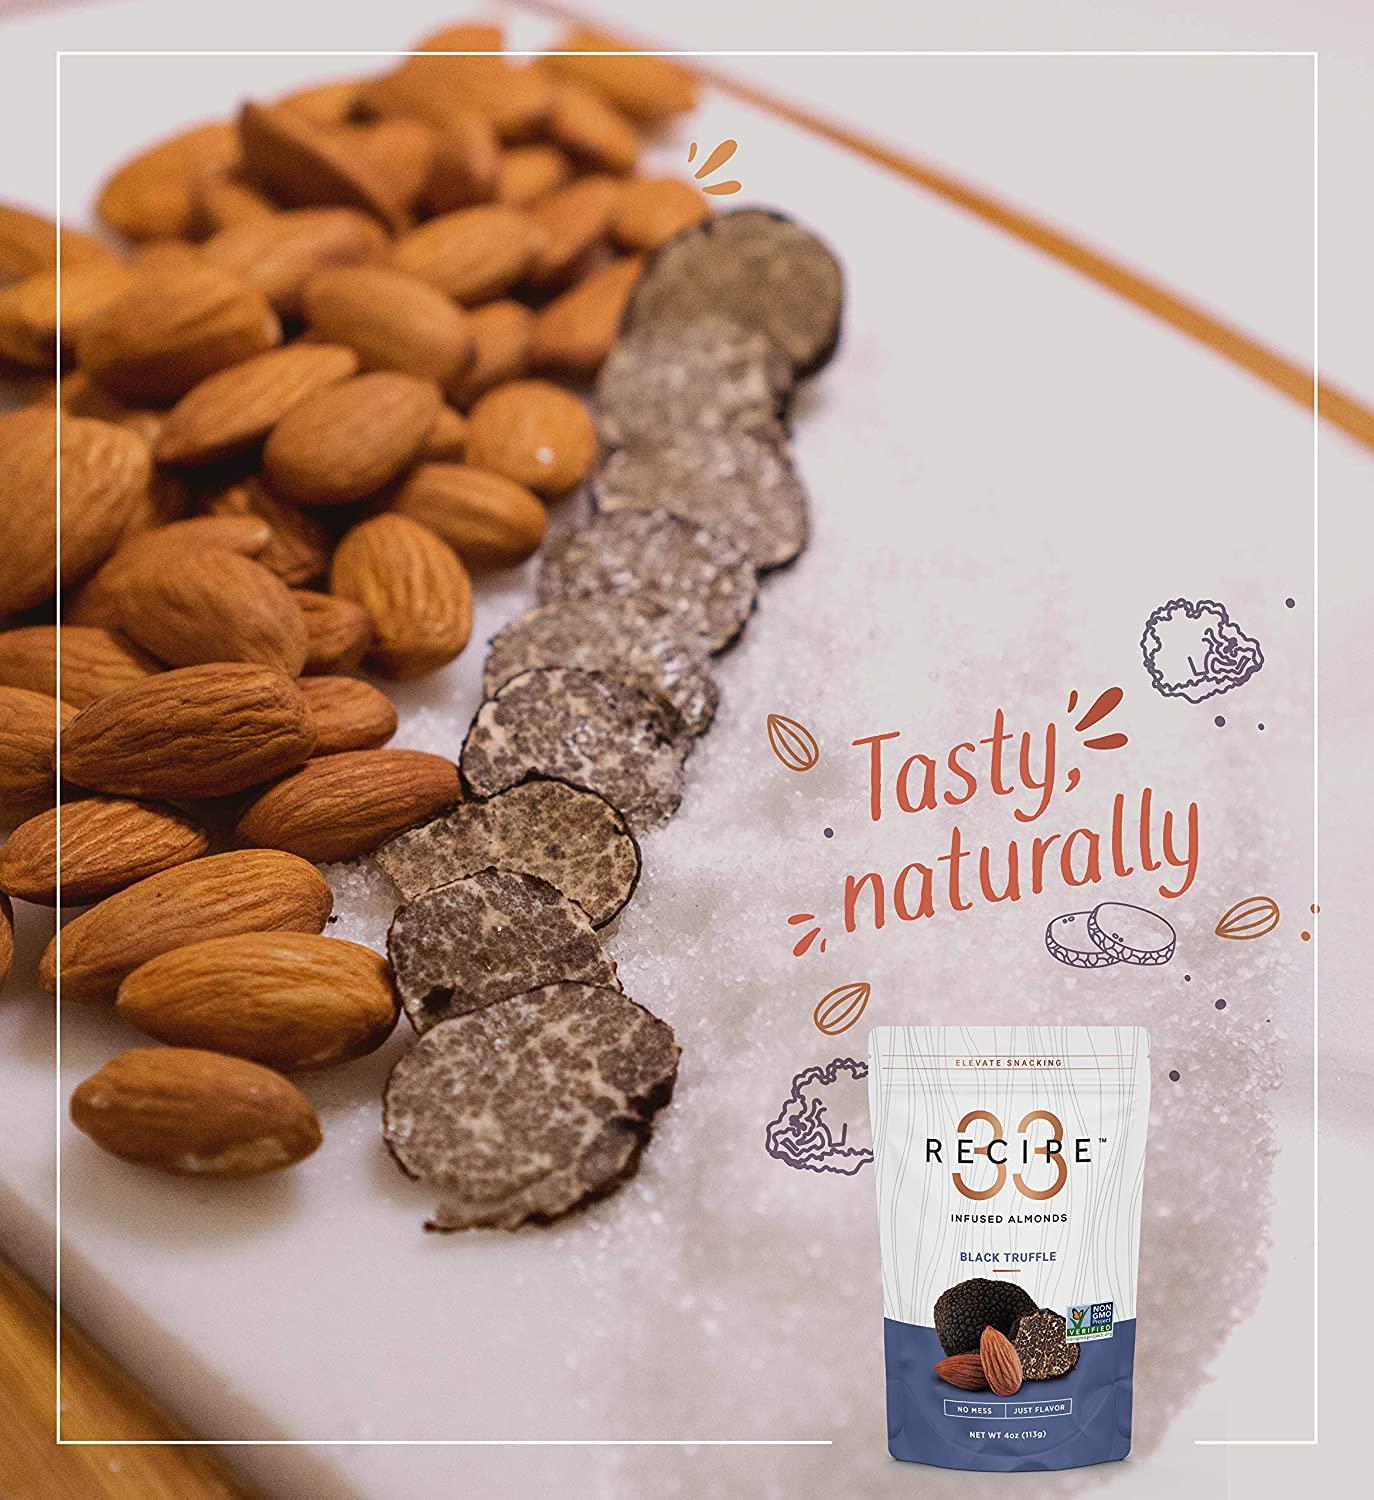 RECIPE 33 Black Truffle Infused Almonds, Gourmet Vegan, High